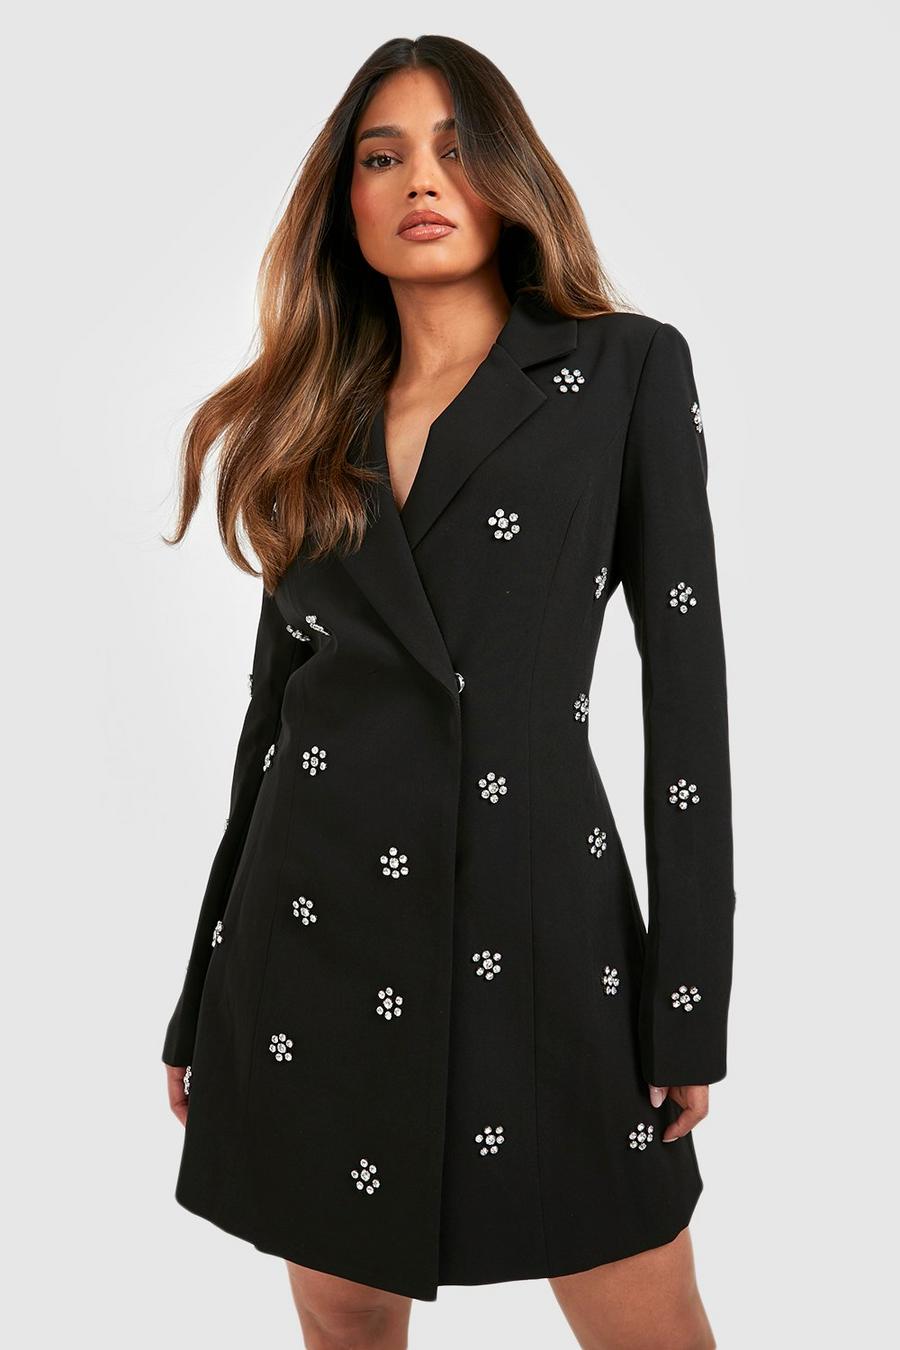 Black Daisy Crystal Embellished Tailored Blazer Dress